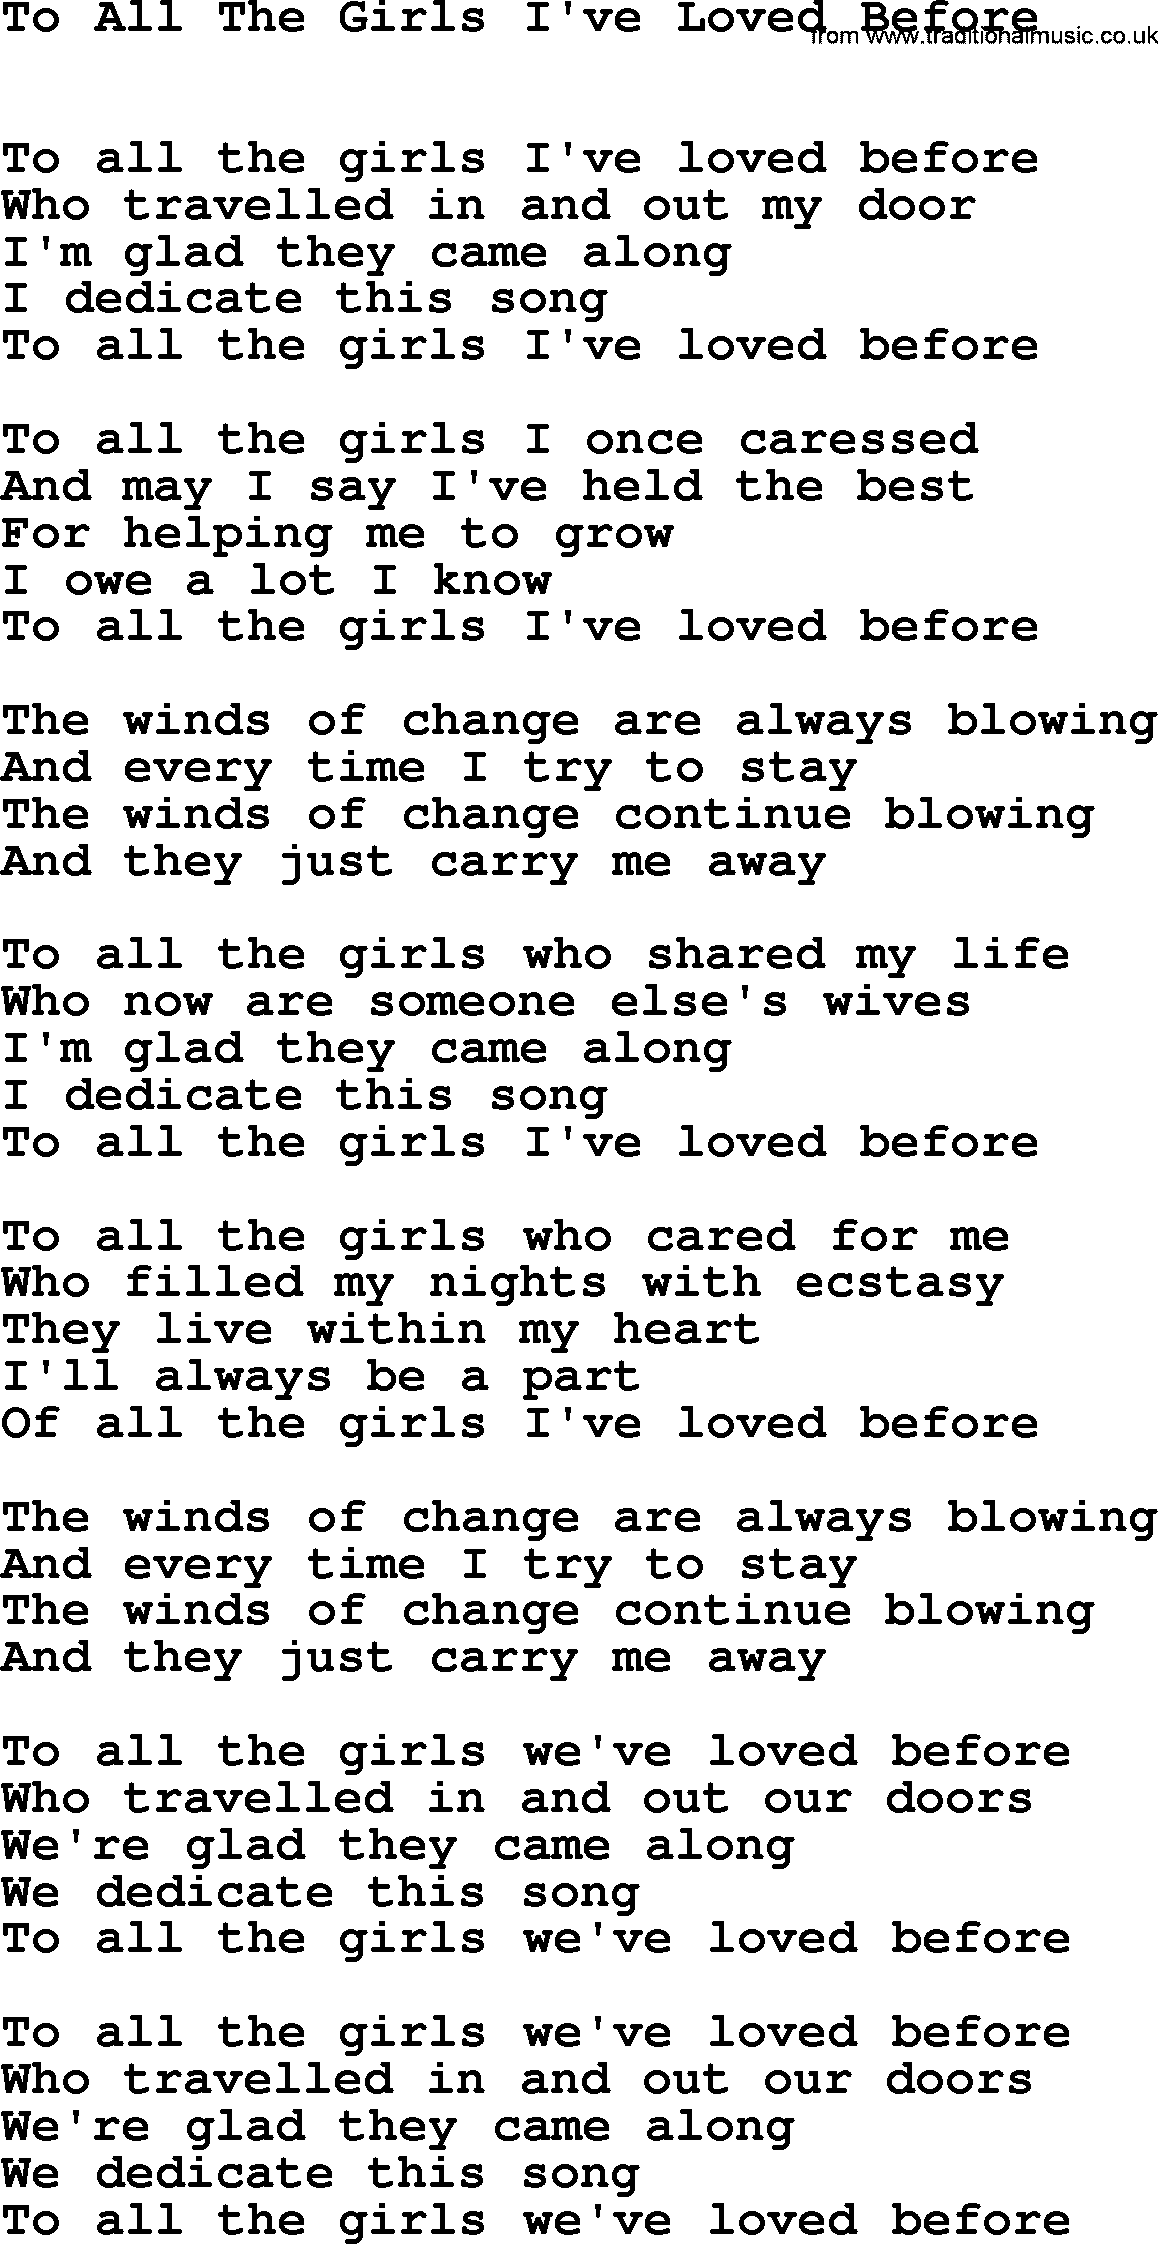 Willie Nelson song: To All The Girls I've Loved Before lyrics